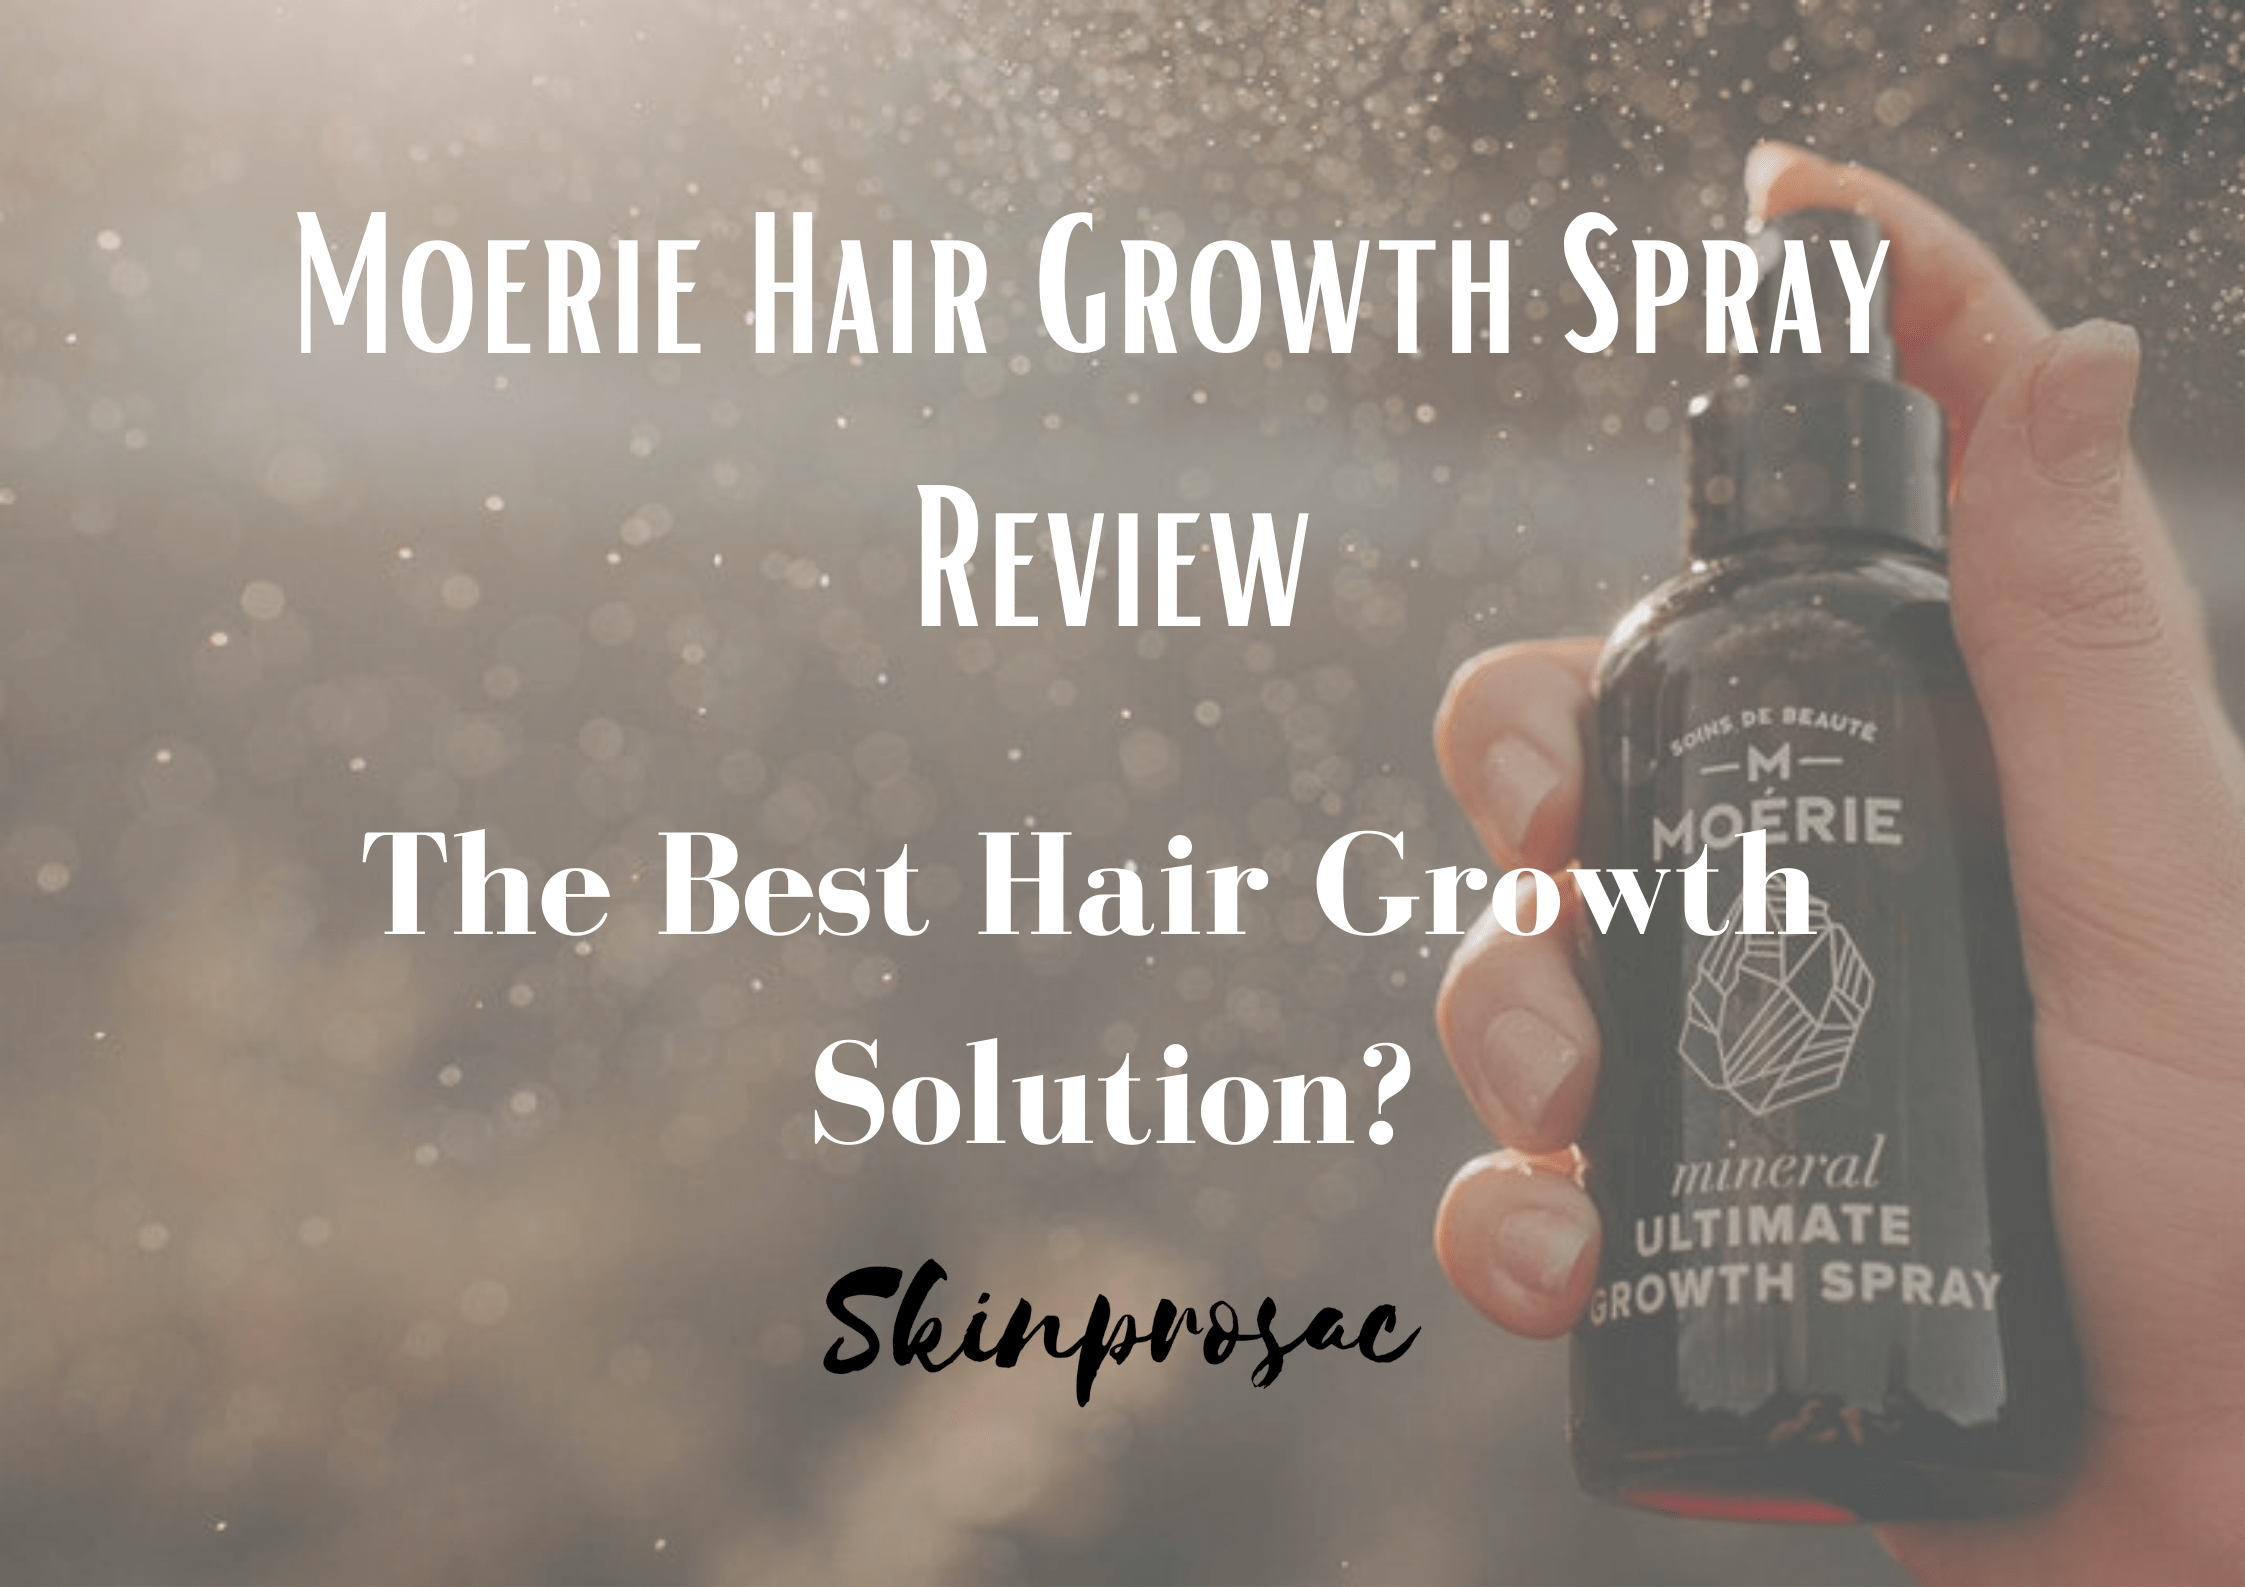 Moerie Hair Growth Spray Reviews